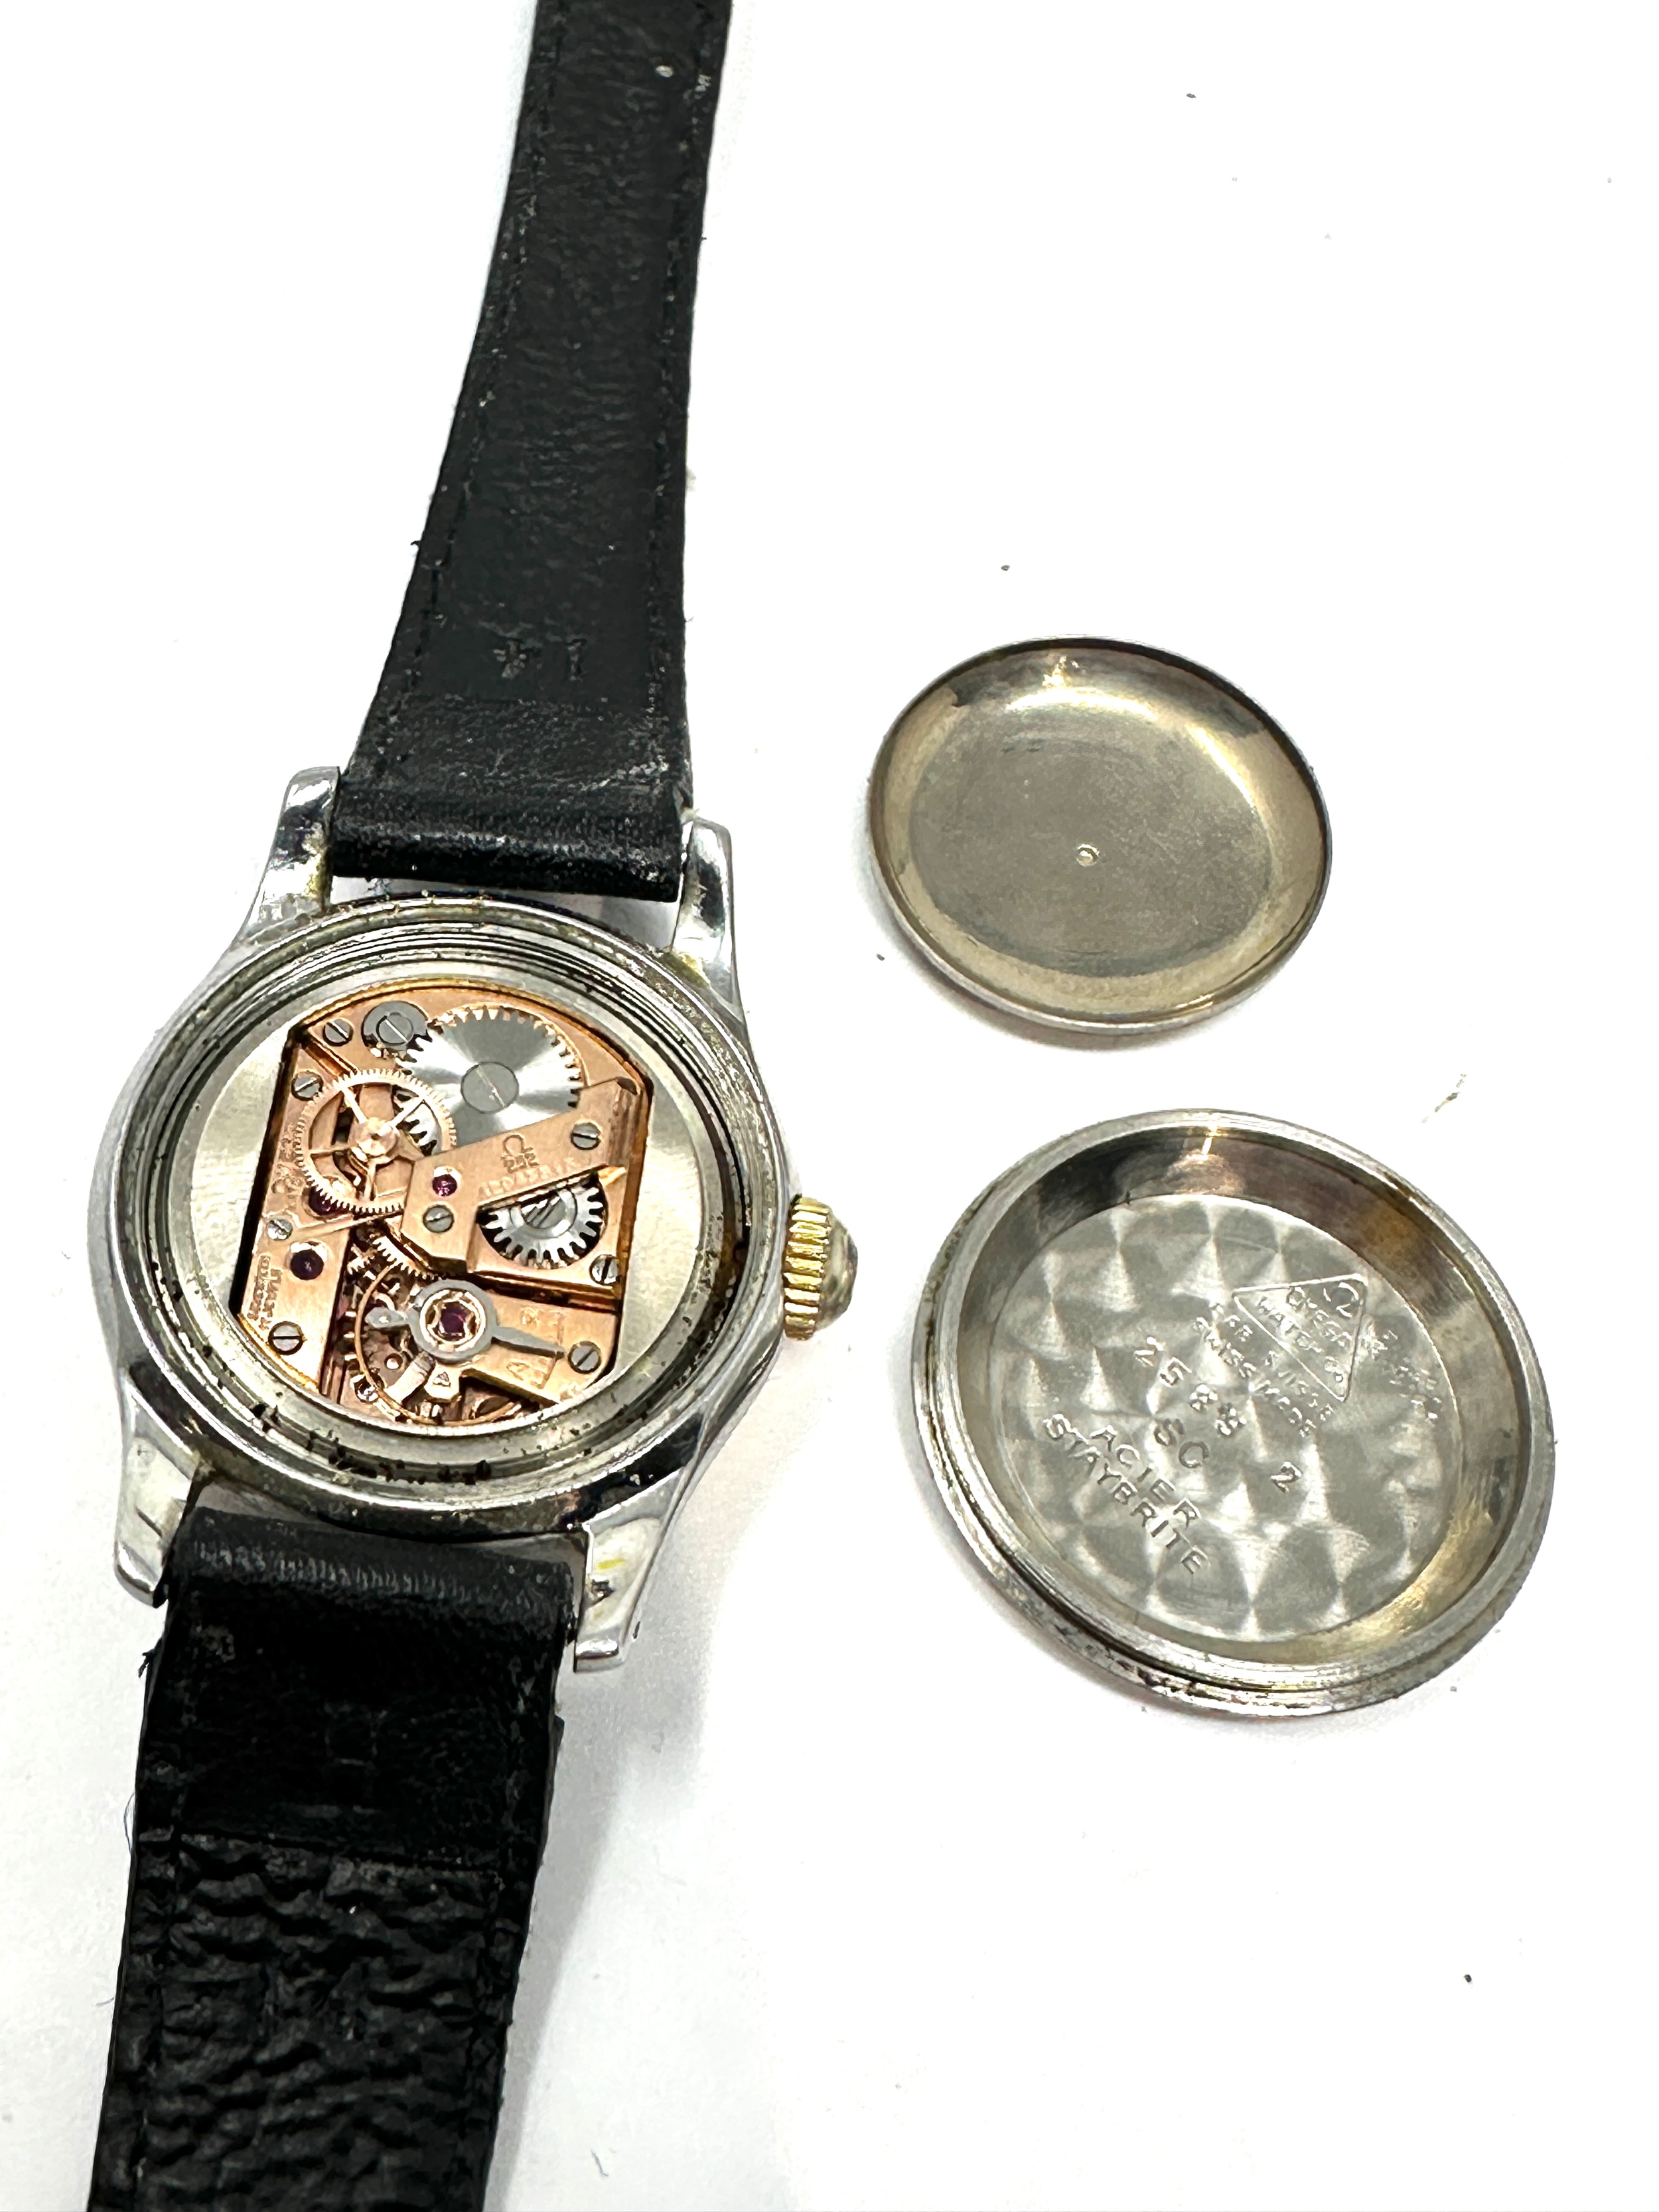 vintage ladies omega wristwatch cal 252 the watch ticks when shaken the winder keeps winding - Image 3 of 6